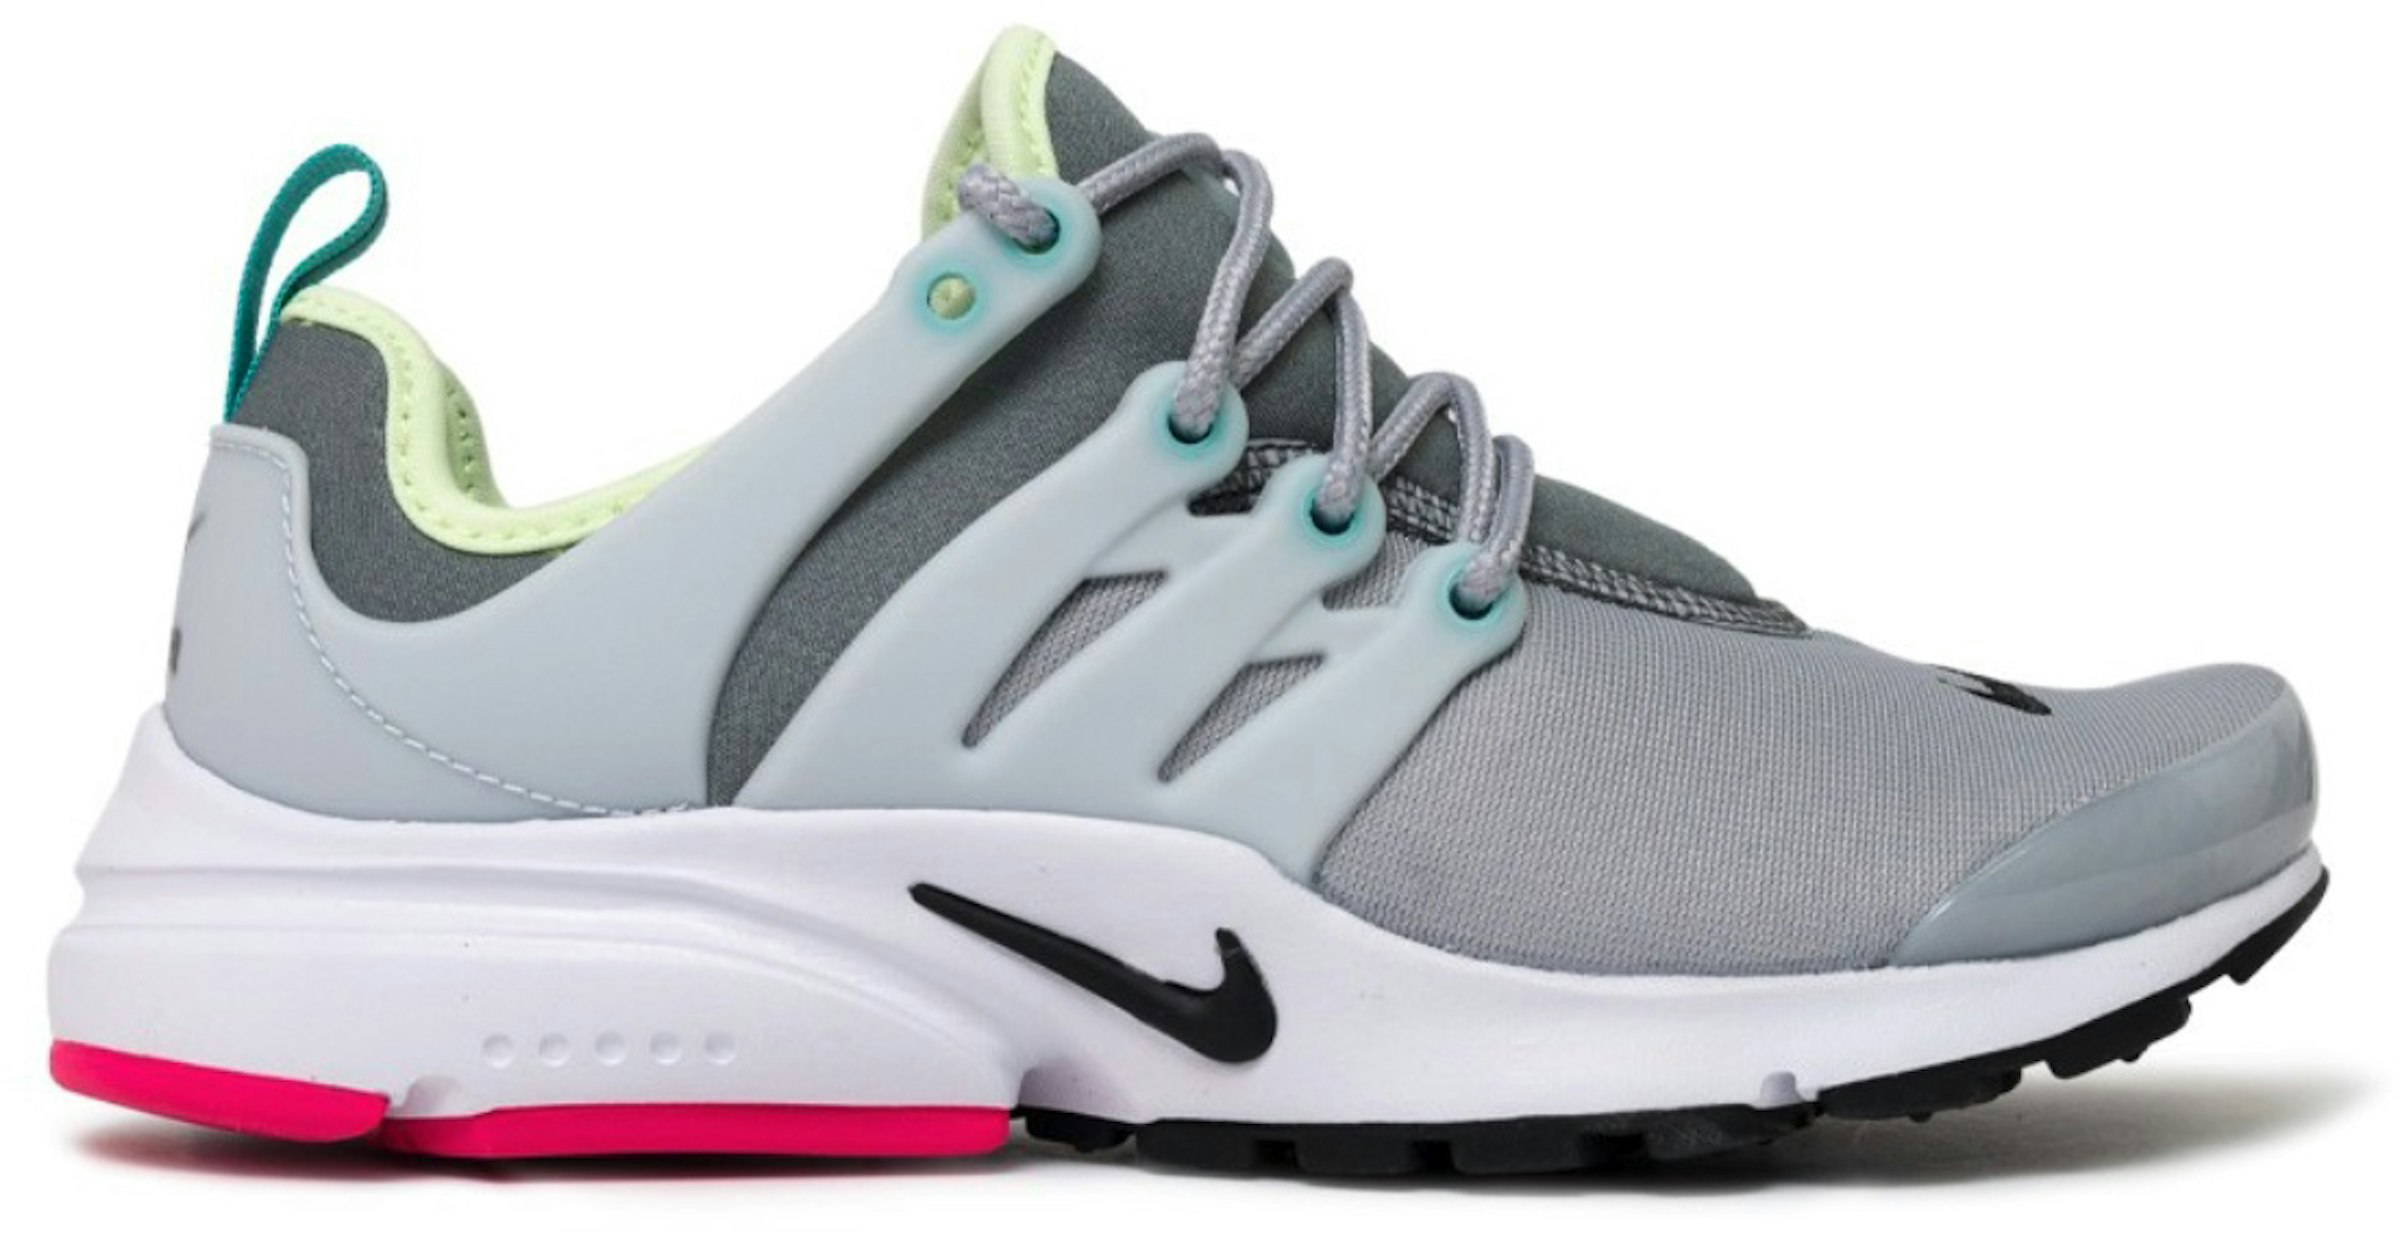 Nike Presto Cool Grey (Women's) - 878068-018 - US